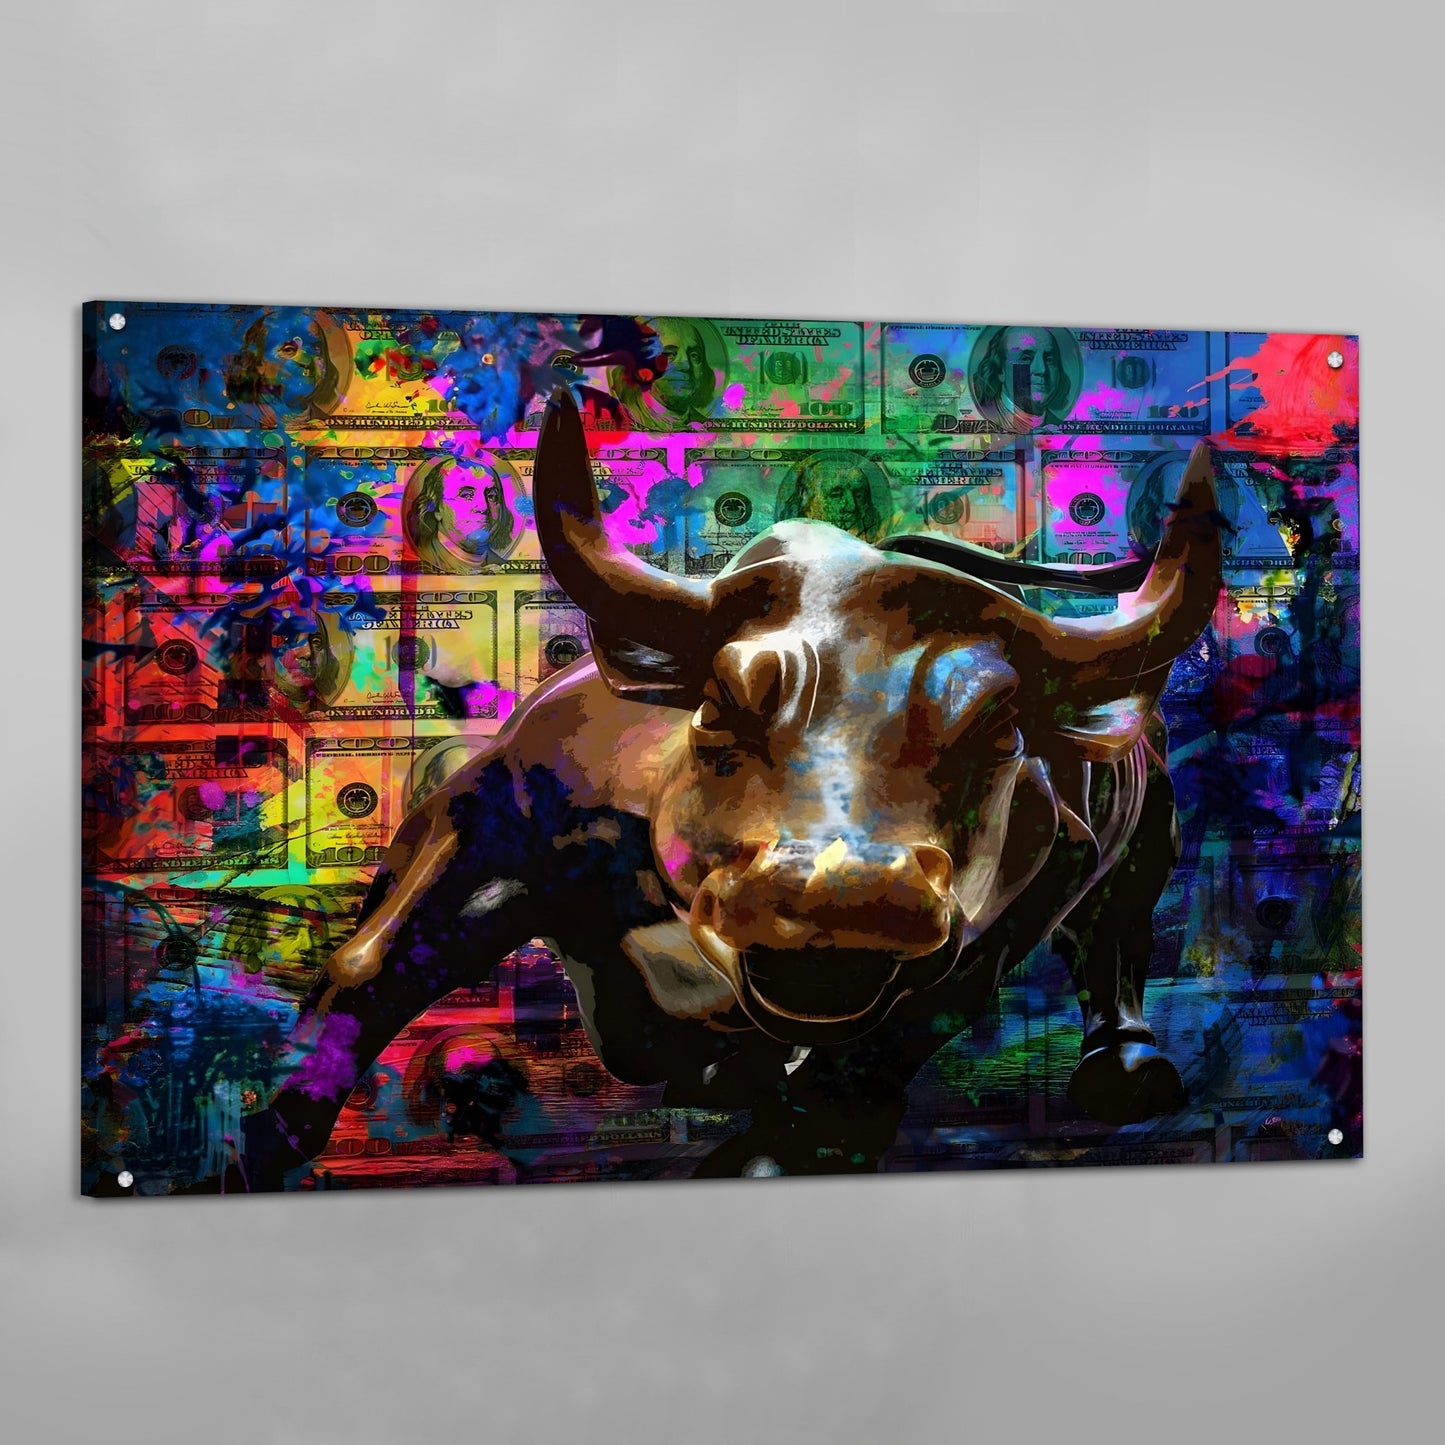 Cuadro Pop Art Wall Street - La Casa Del Cuadro